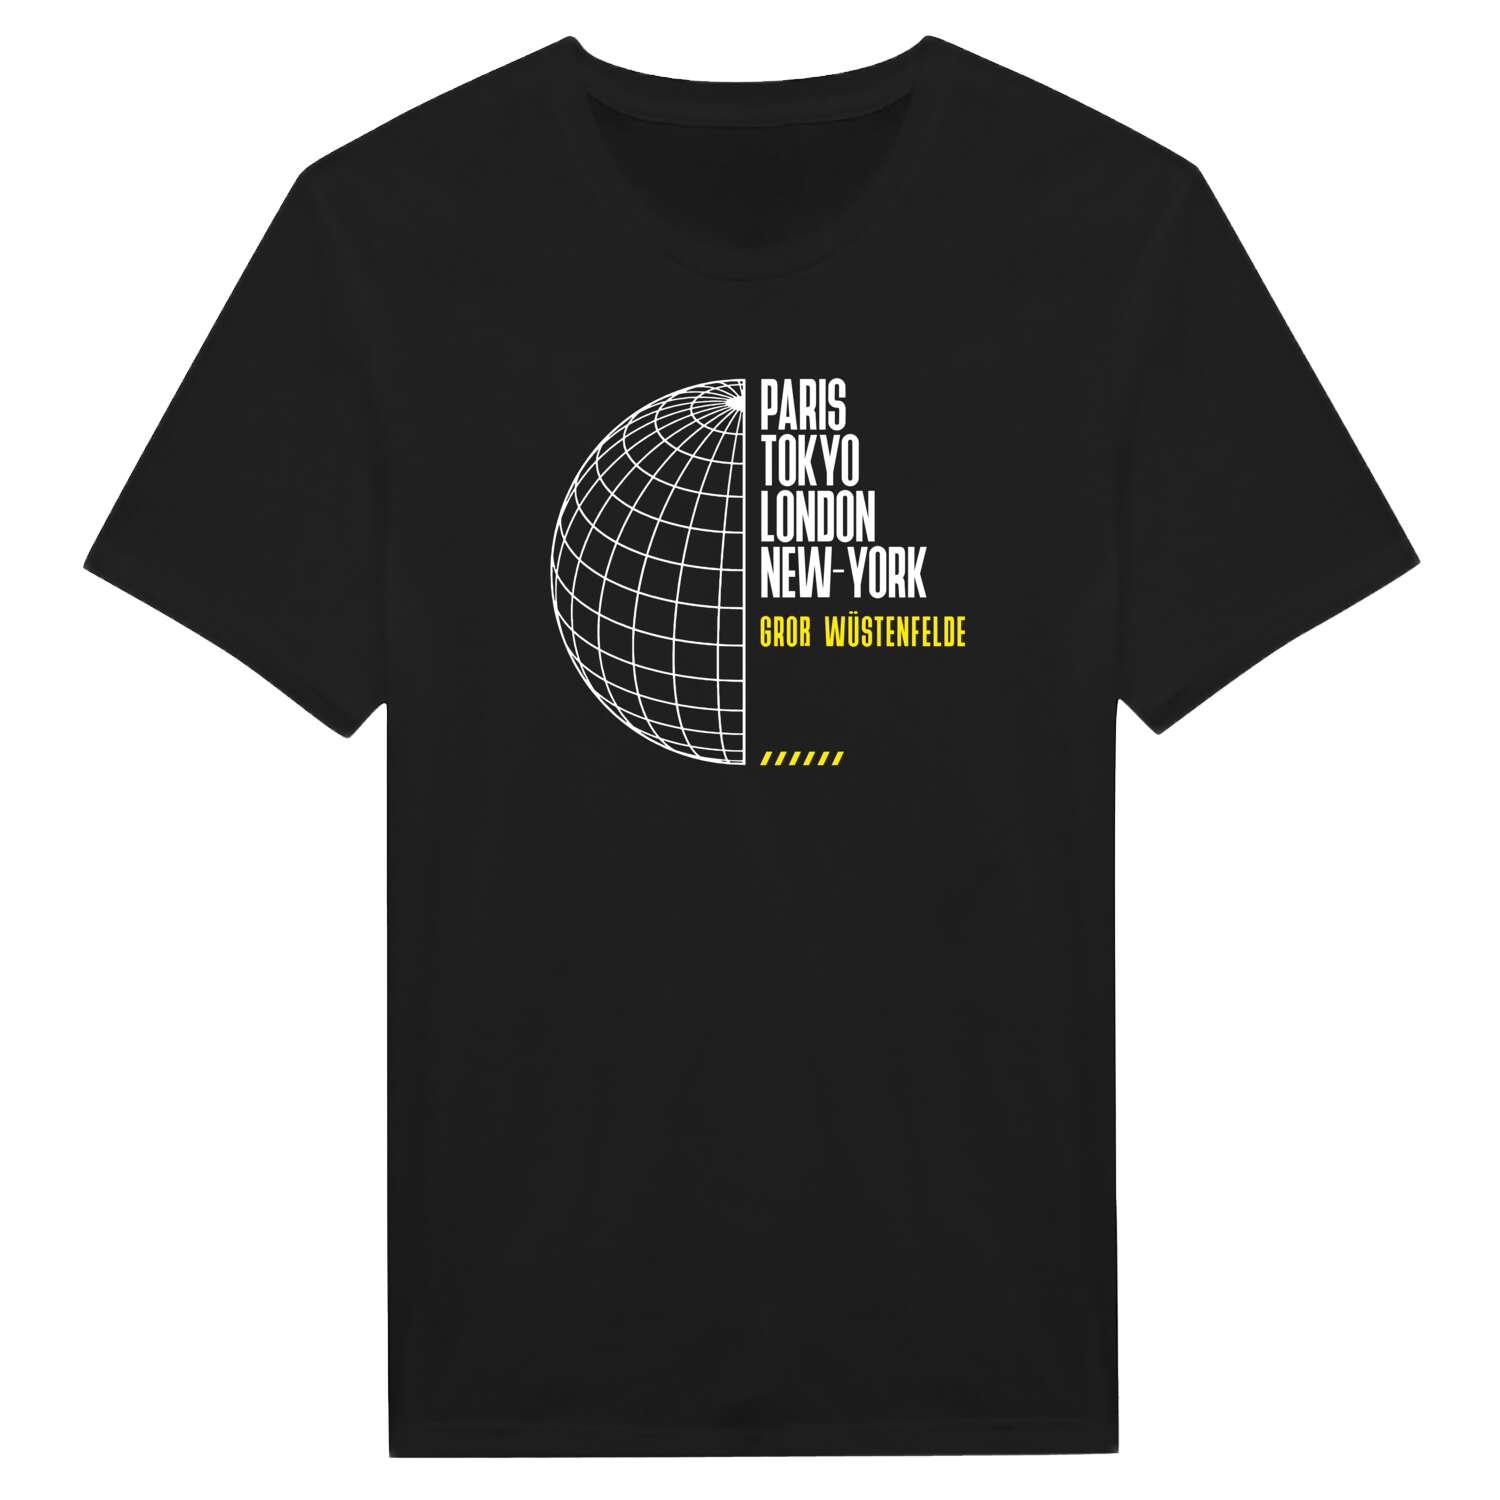 Groß Wüstenfelde T-Shirt »Paris Tokyo London«